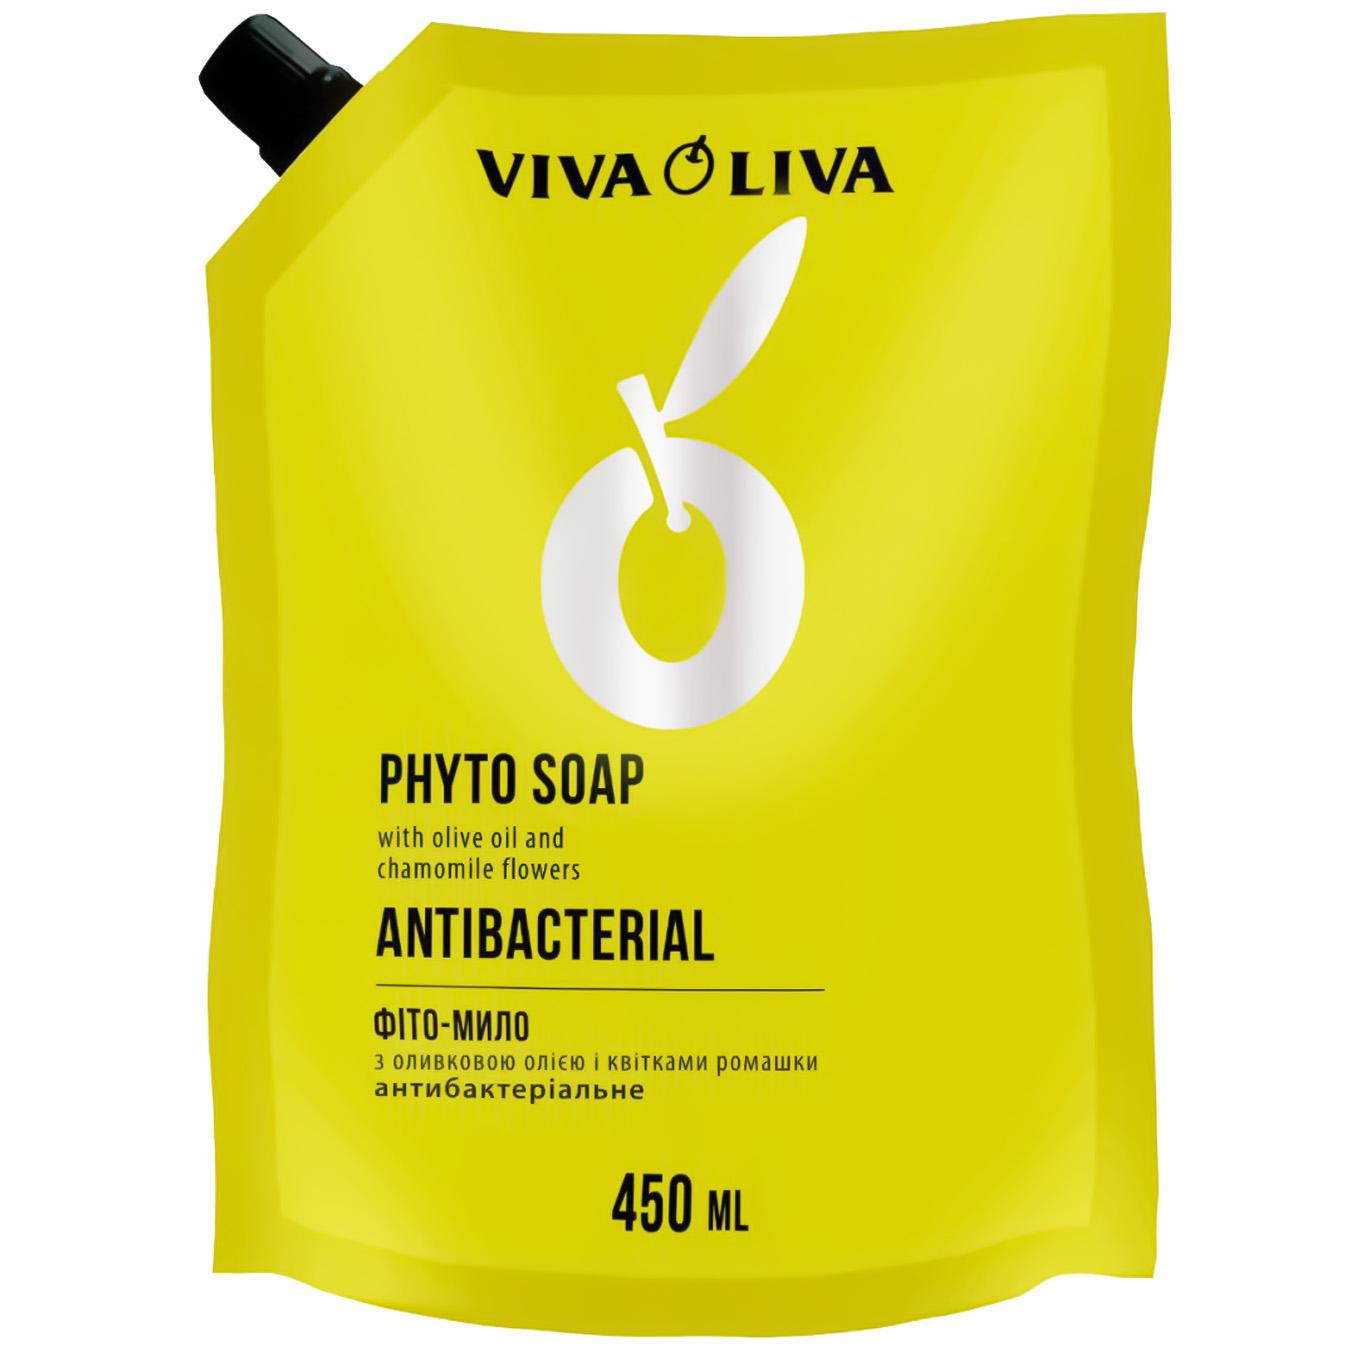 Фіто-мило Viva oliva duo-pack  рідке антибактеріальне 450мл